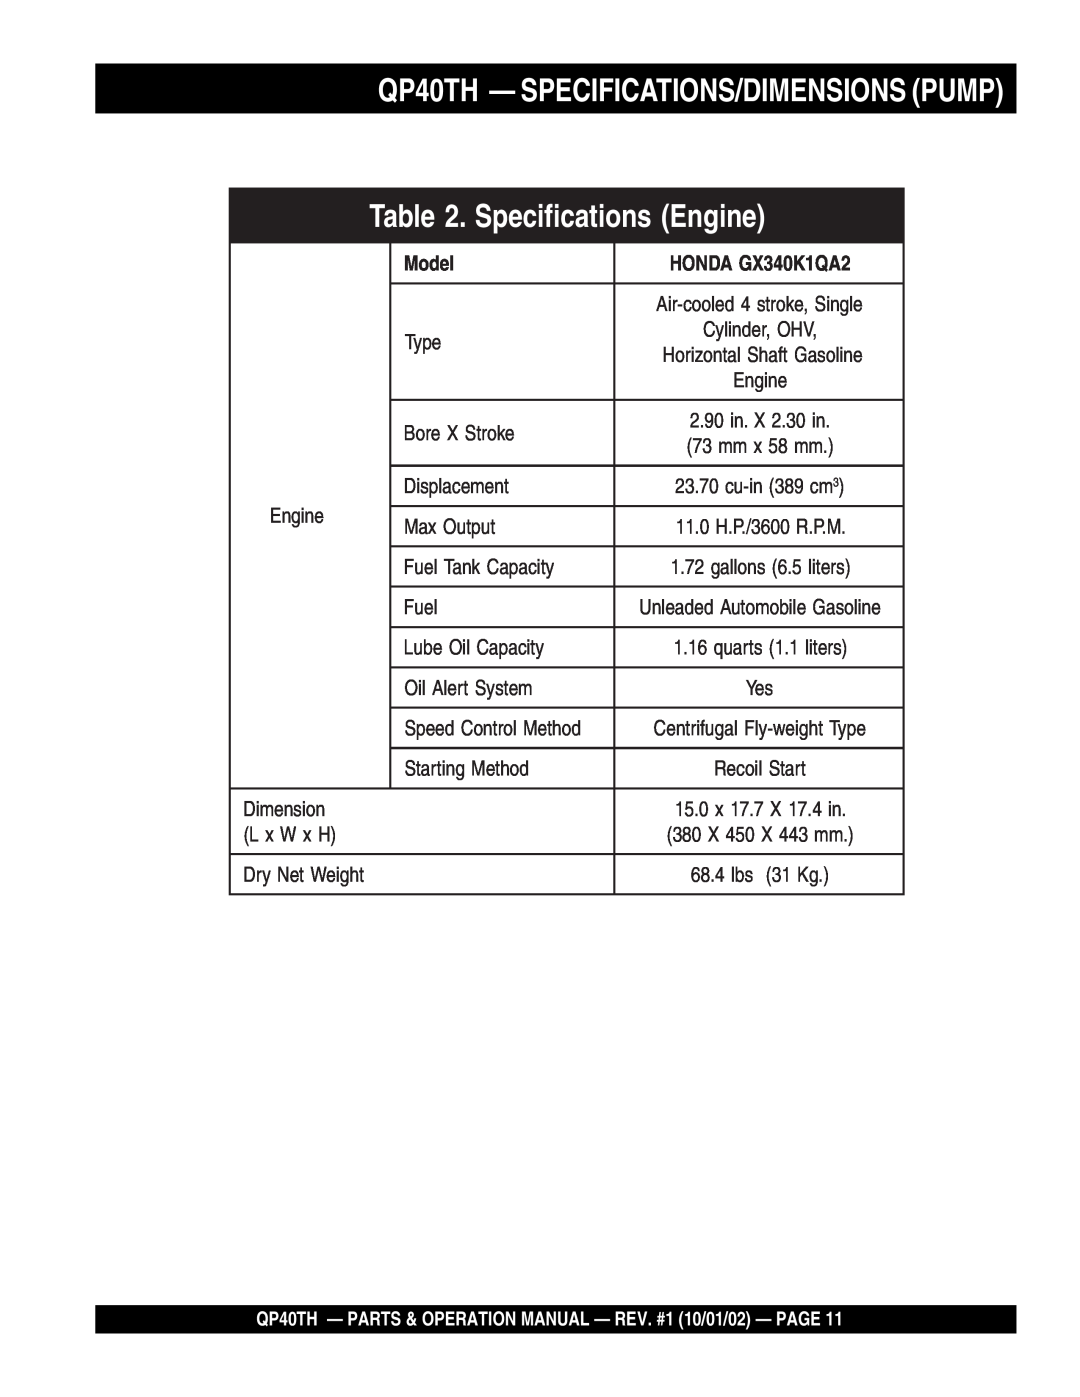 Multiquip operation manual Specifications Engine, QP40TH - SPECIFICATIONS/DIMENSIONS PUMP, HONDA GX340K1QA2, Model 